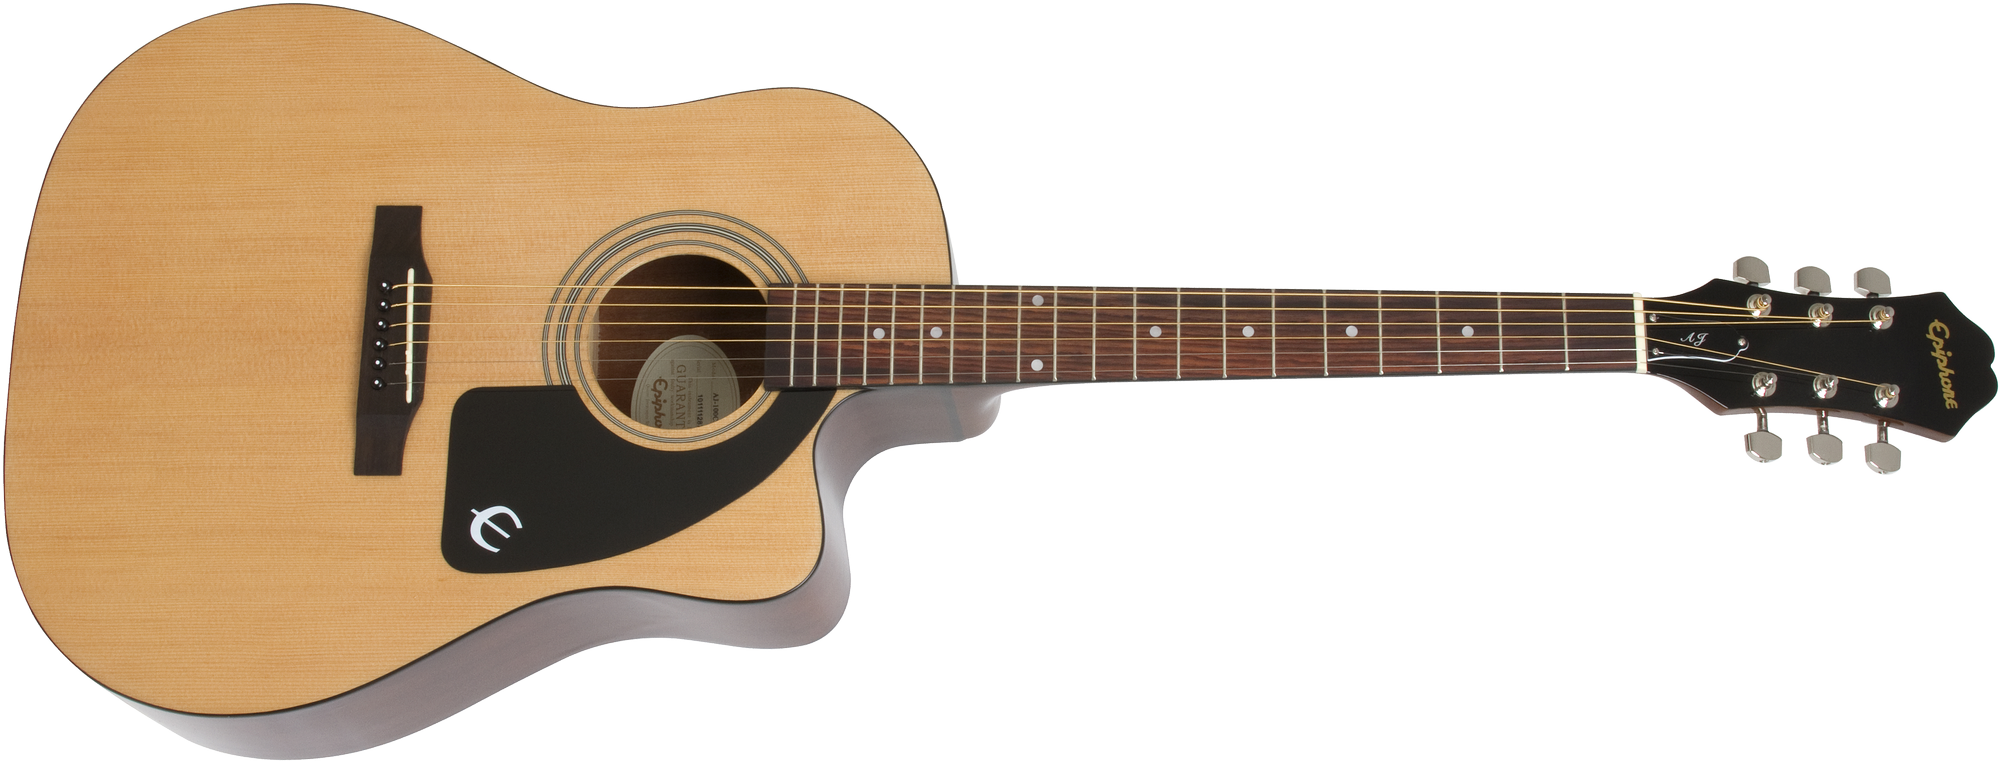 Epiphone AJ-100CE Western Guitar (Natural)